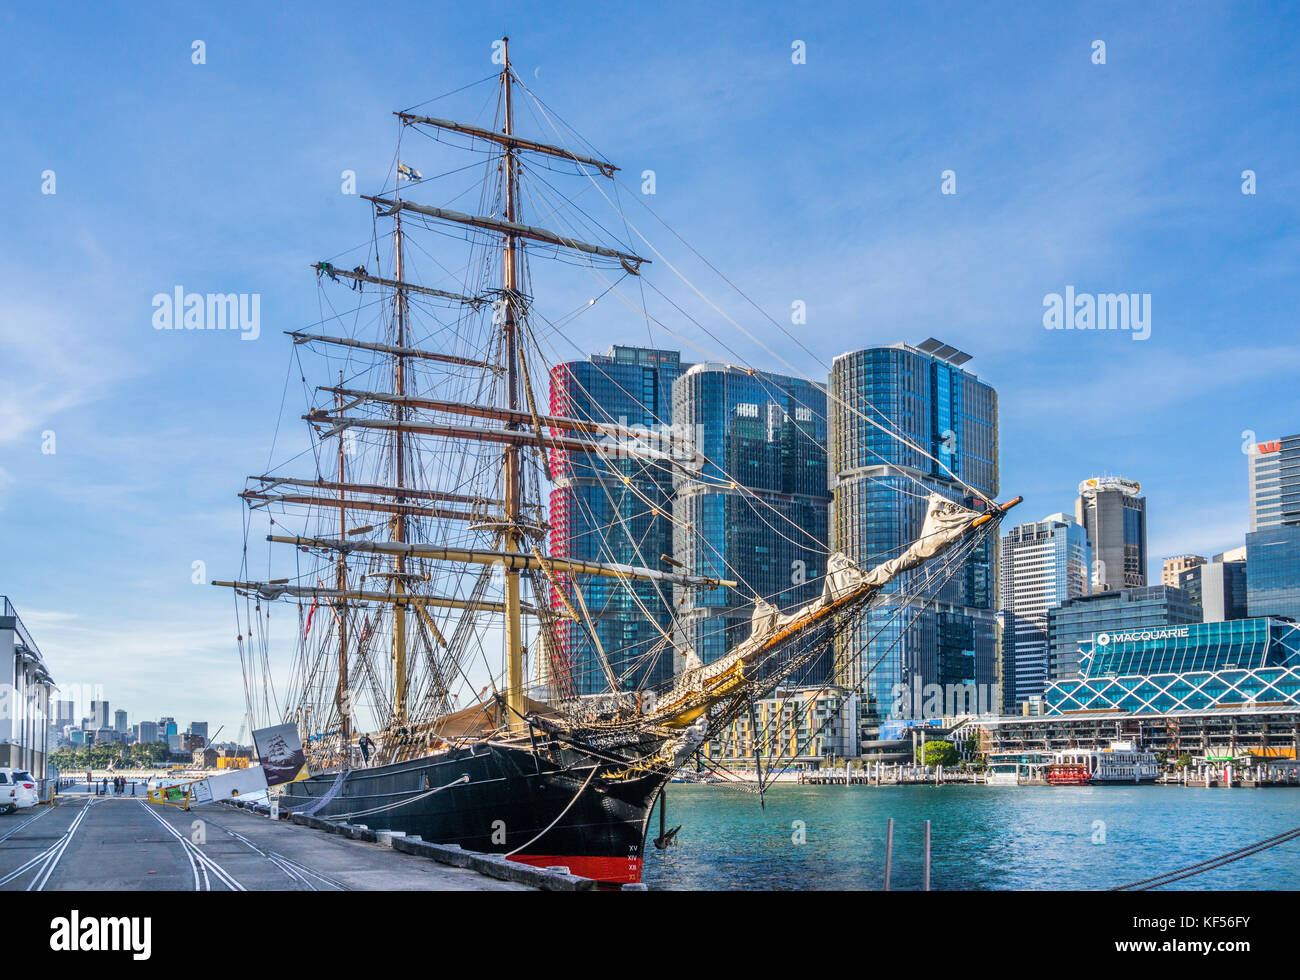 Australien, New South Wales, Sydney, Darling Harbour, Kai7, Maritime Heritage Centre, Ansicht des Eisernen - geschält Barke Tall Ship James Craig gegen t Stockfoto